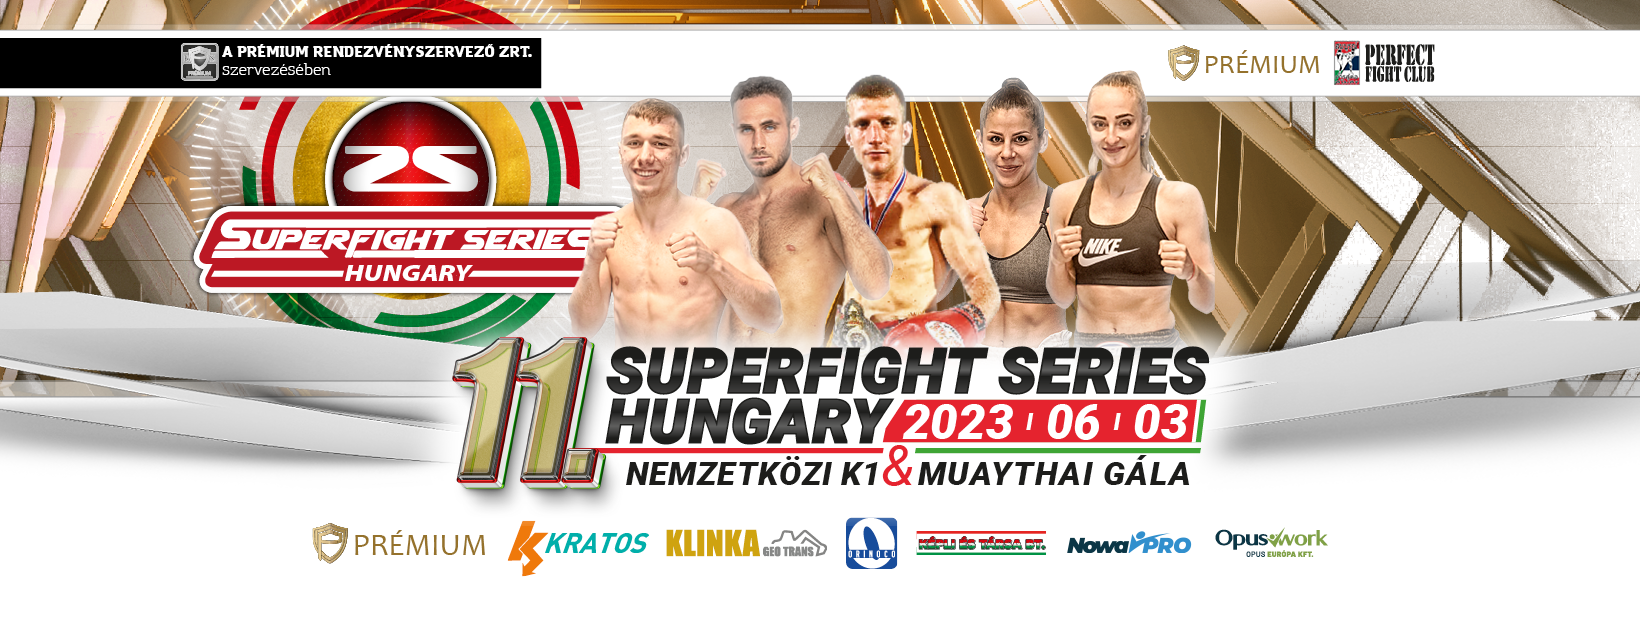 Superfight Series Hungary – Nemzetközi K1 & Muay Thai Gála